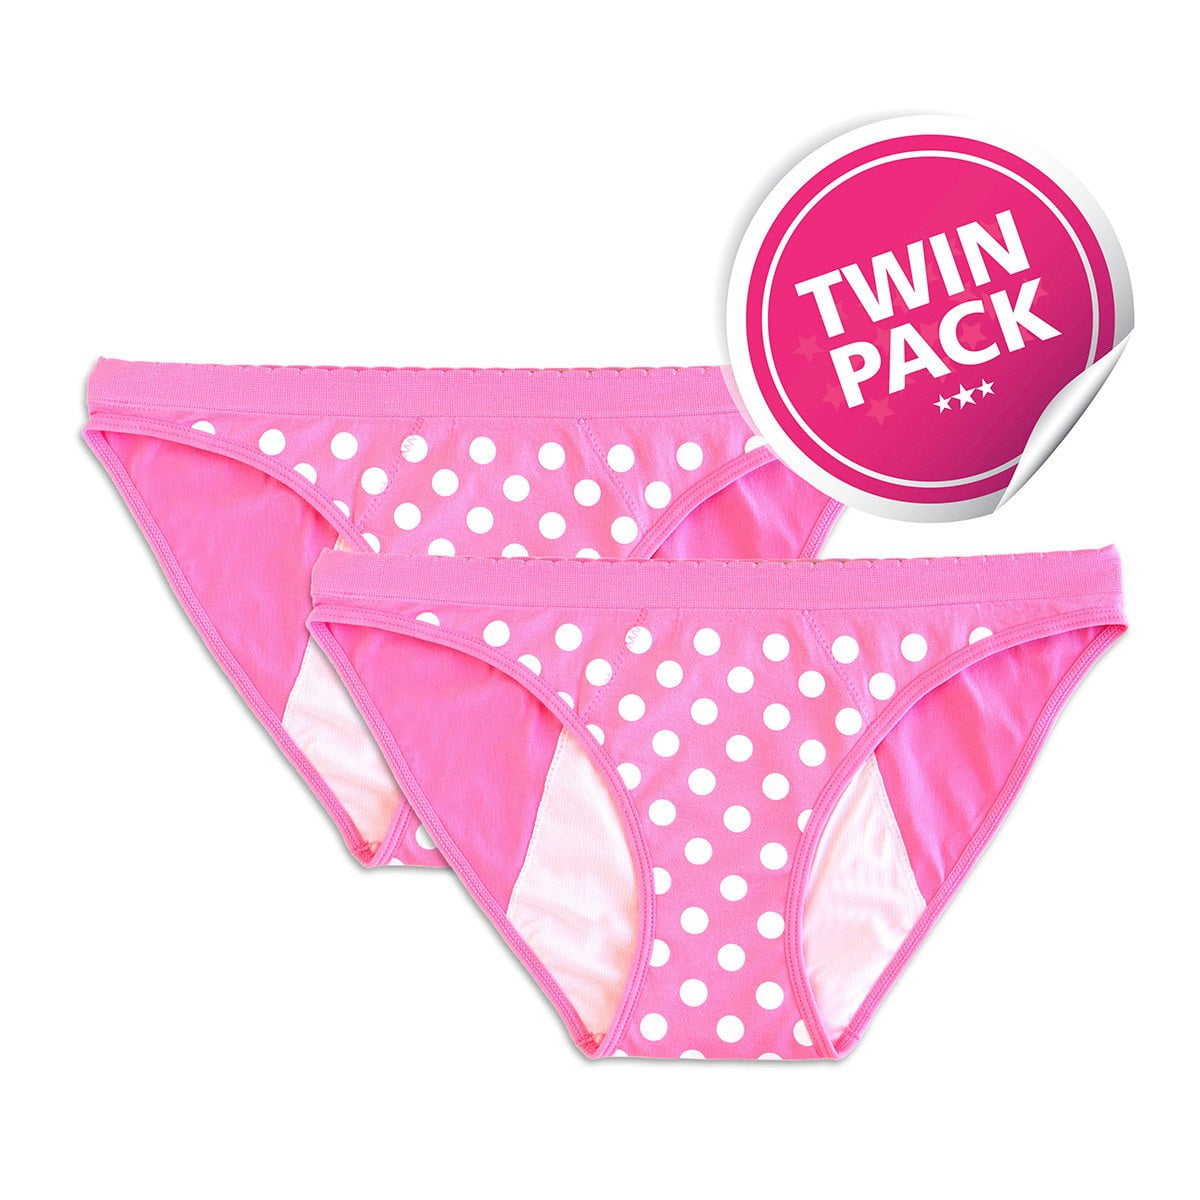 StainFree Reusable Period Panty - 2 Pack Pink Polka Dot Bikini (S)